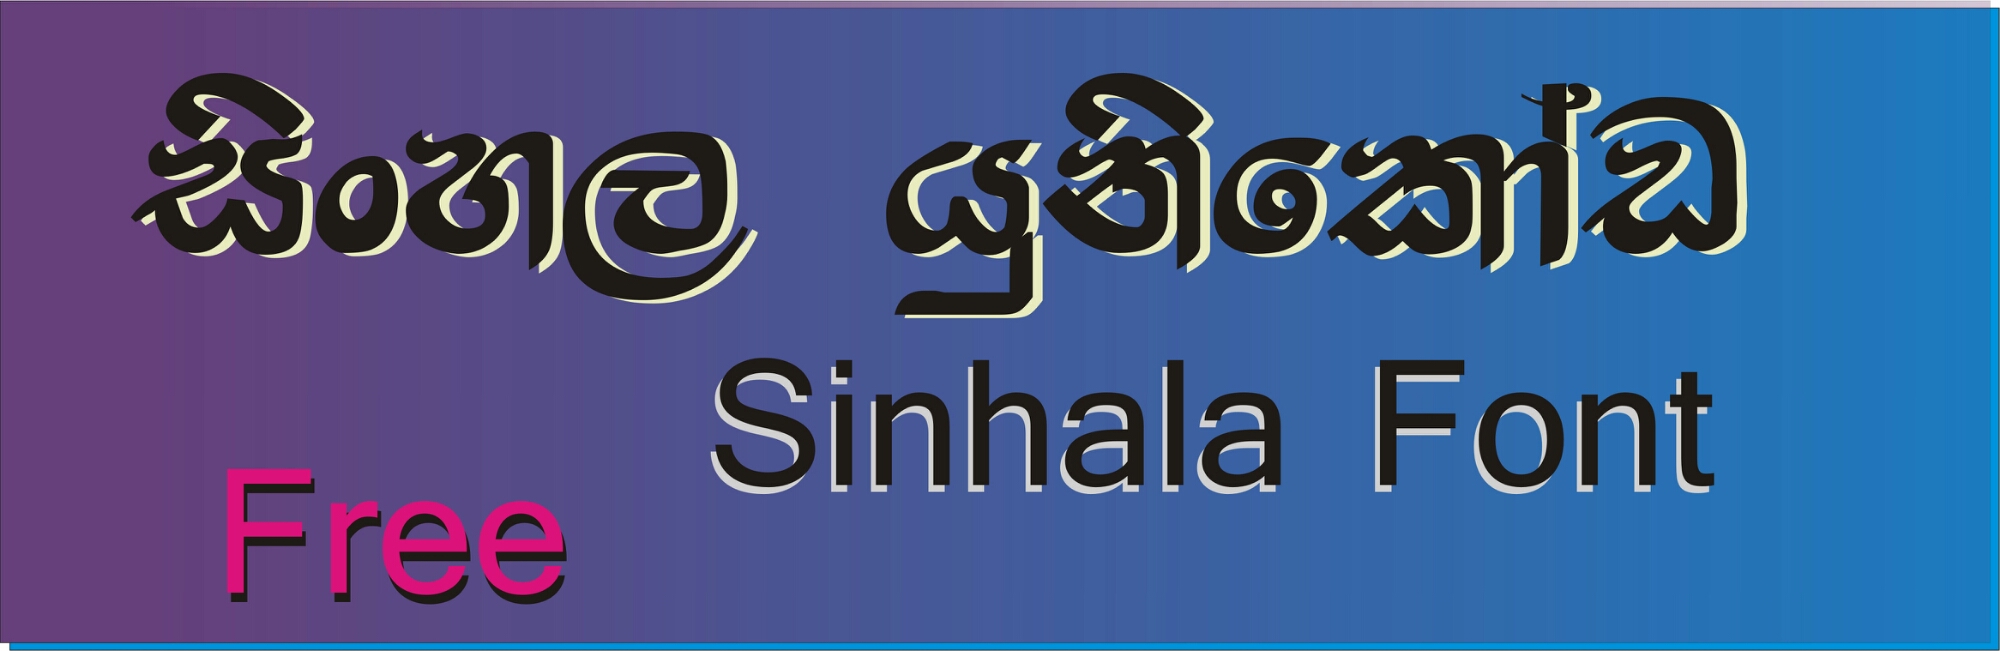 all sinhala fonts free download